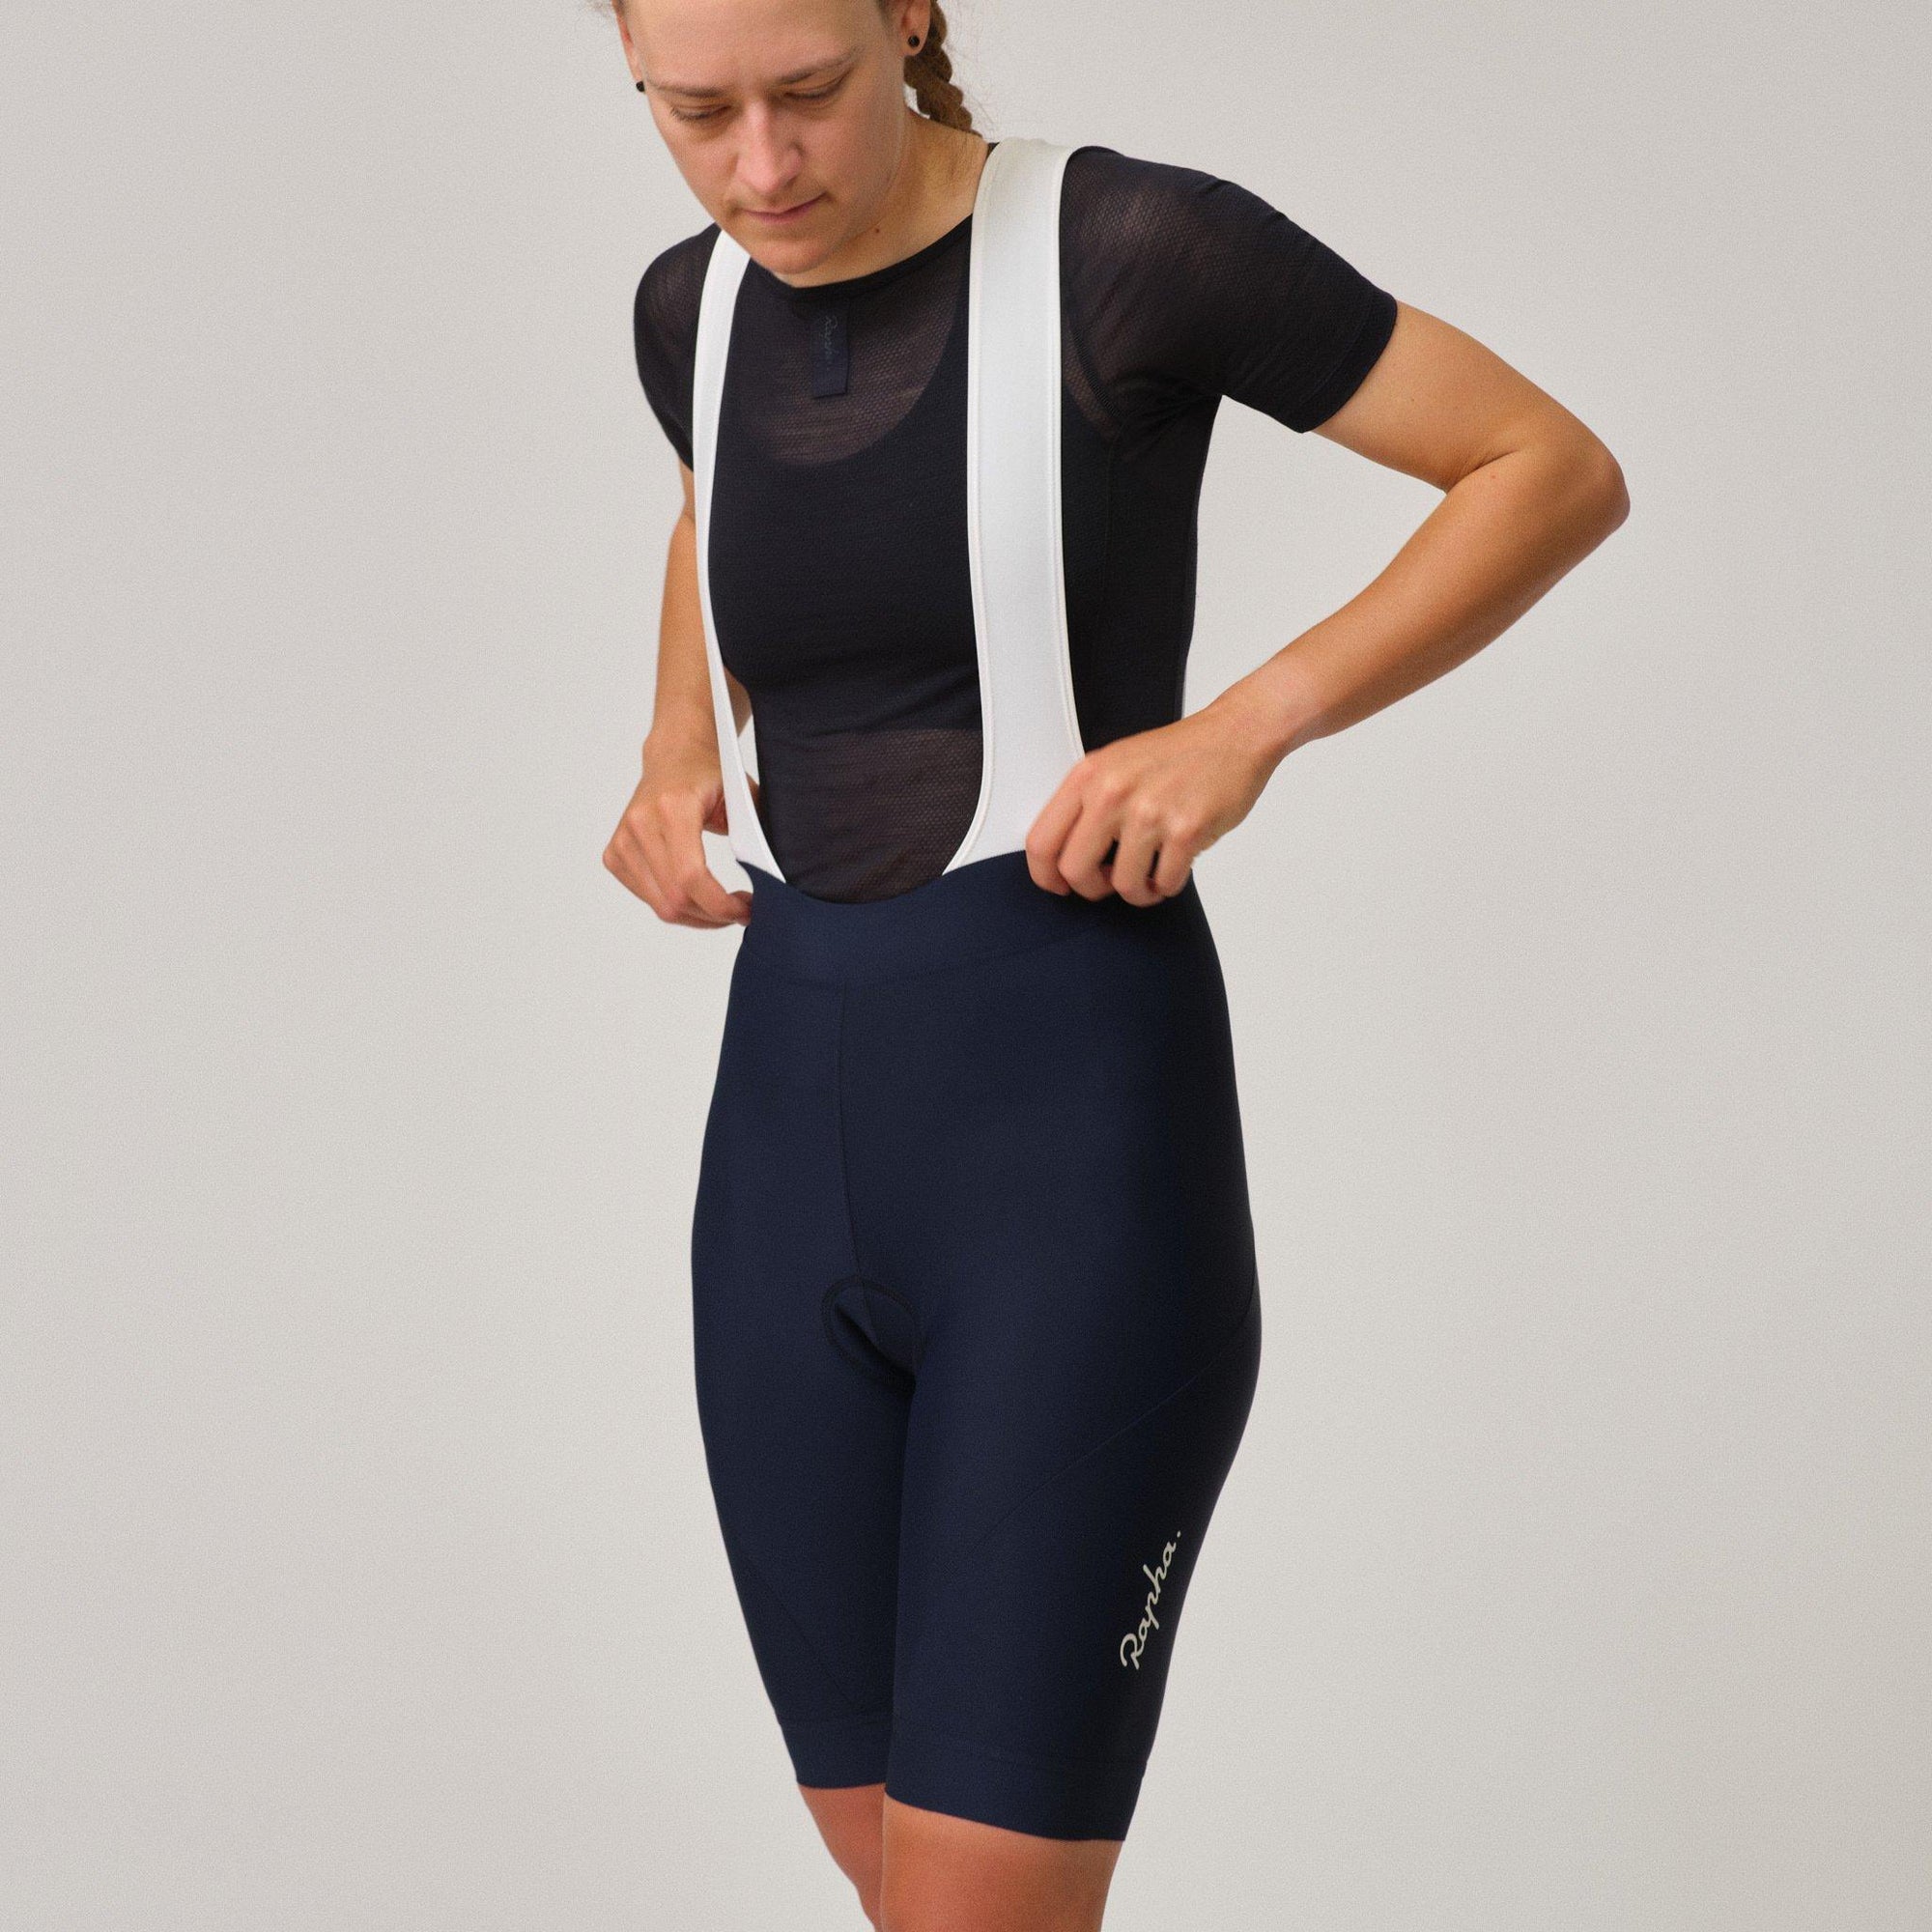 Women's Cycling Bib Shorts & Bib Tights, Rapha